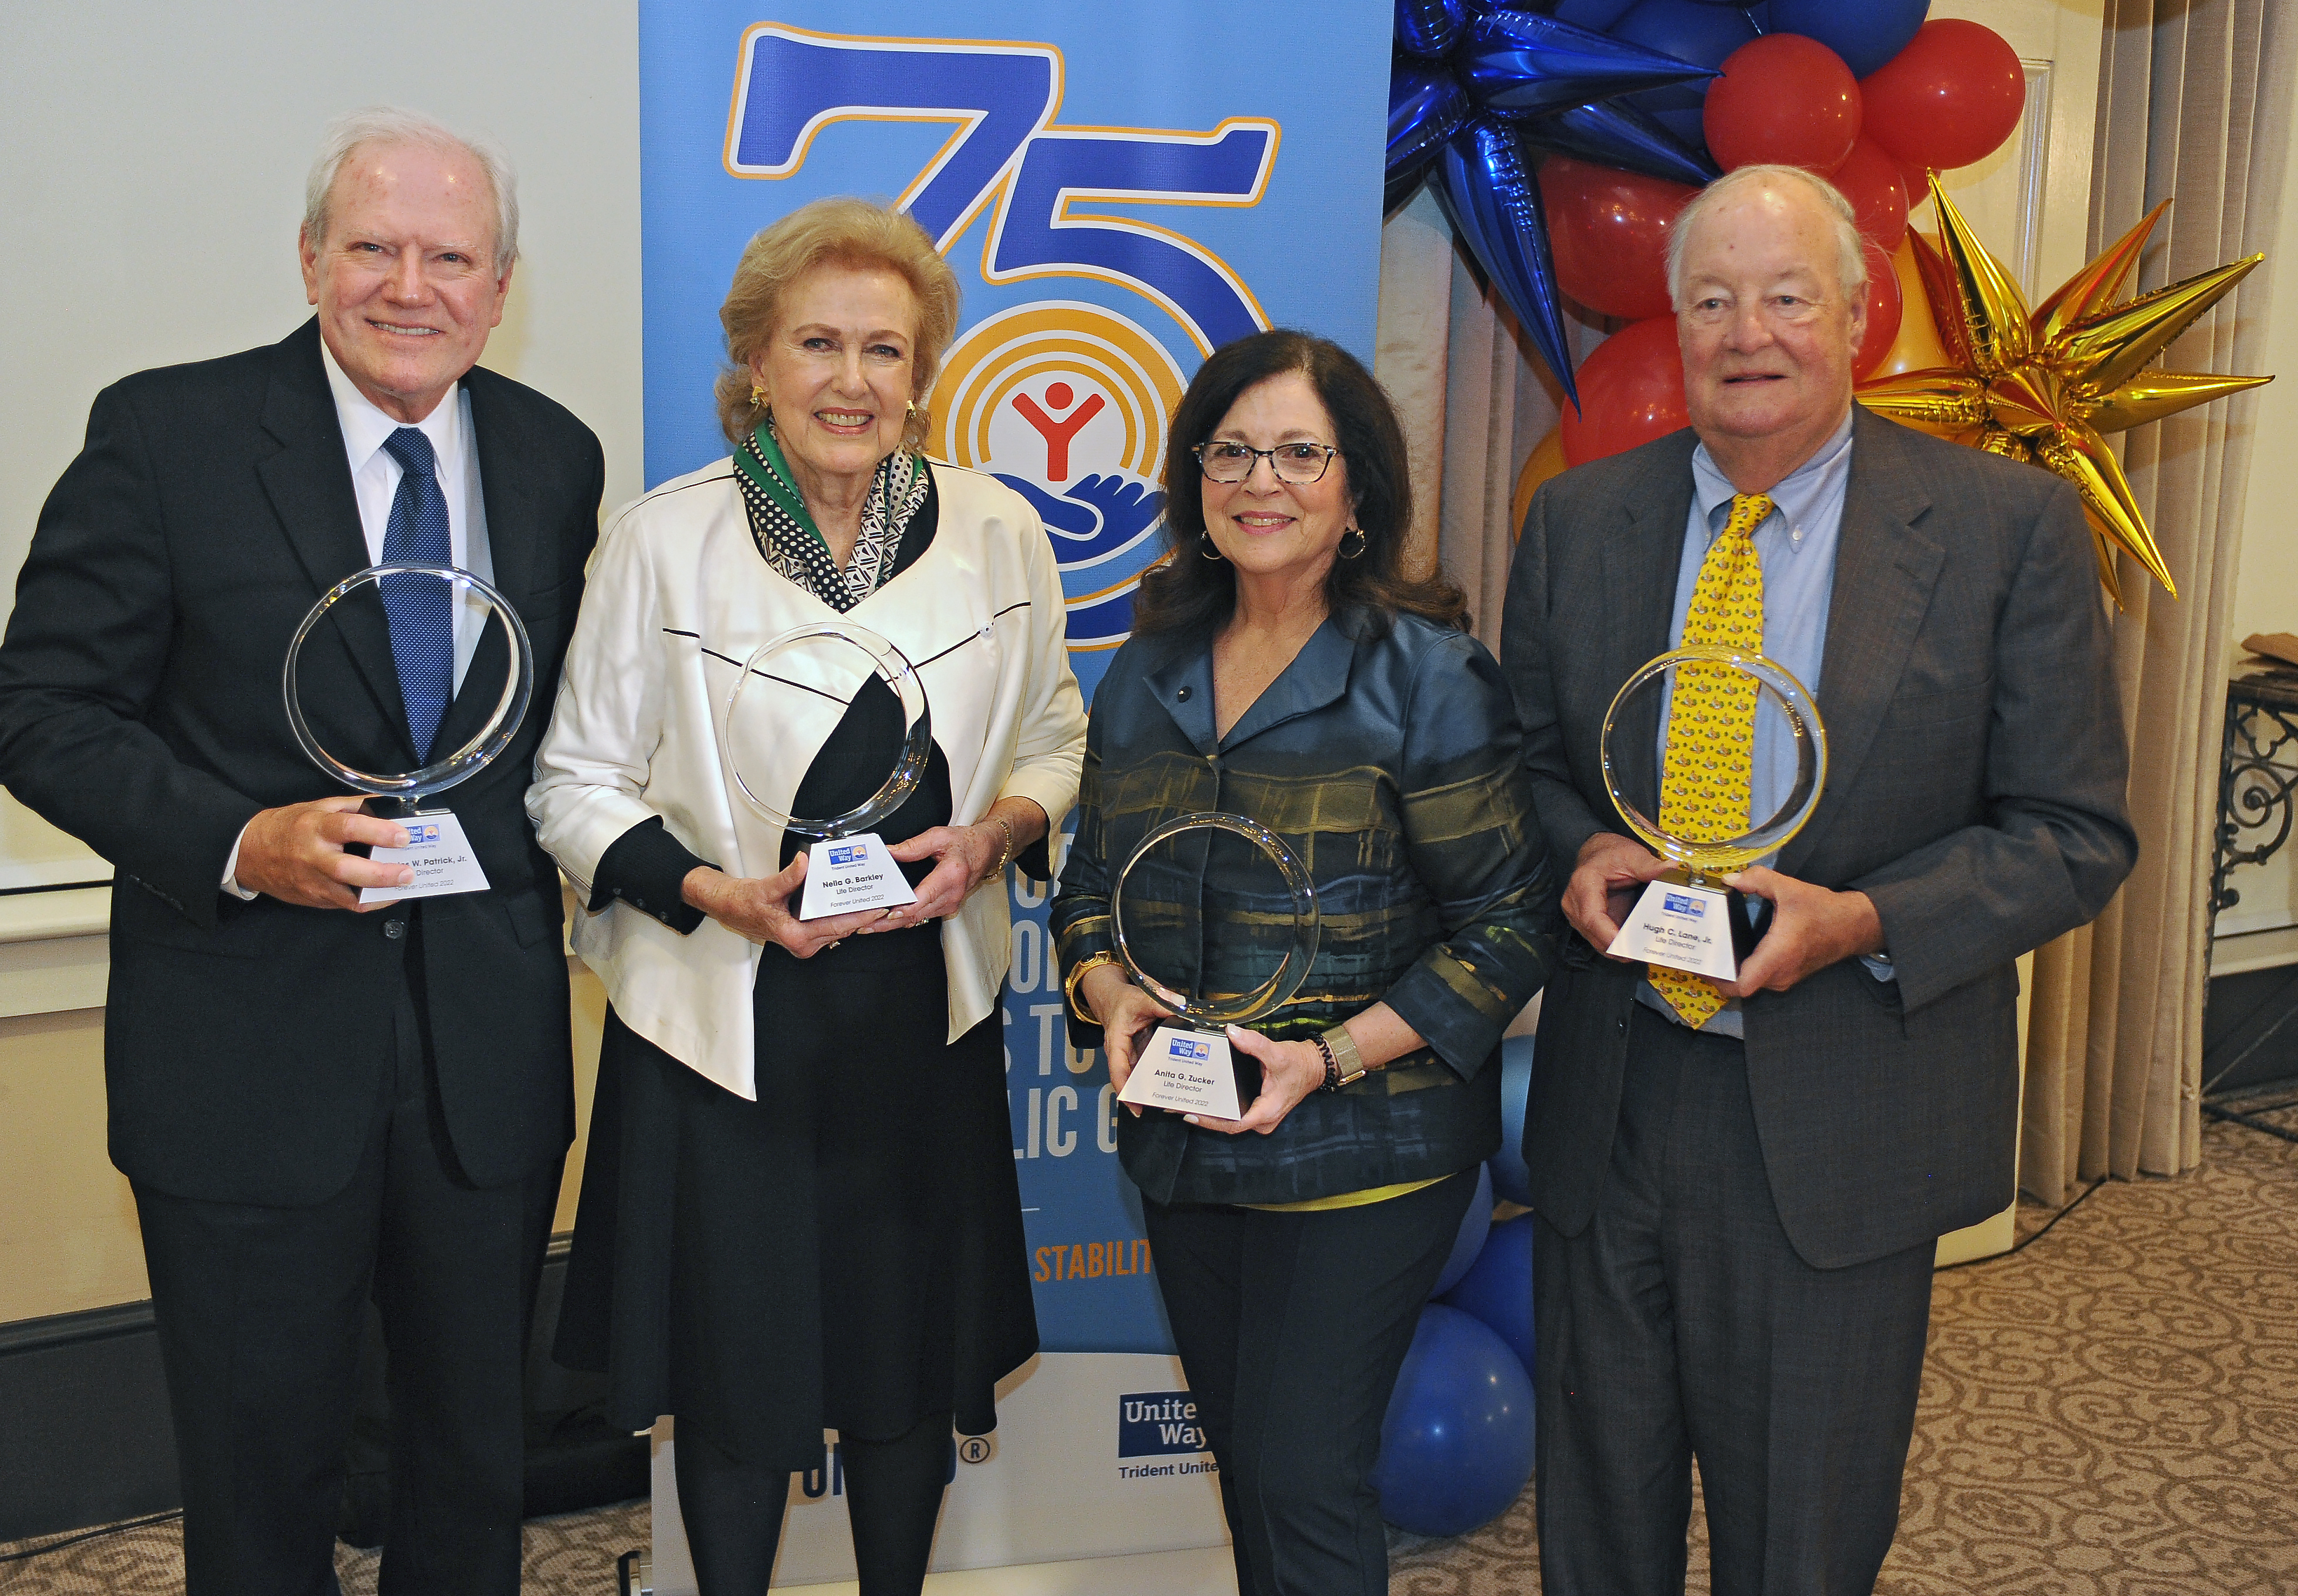 Photo of the four Life Directors holding award - Charles Patrick, Jr., Nella Barkley, Anita Zucker and Hugh Lane, Jr.